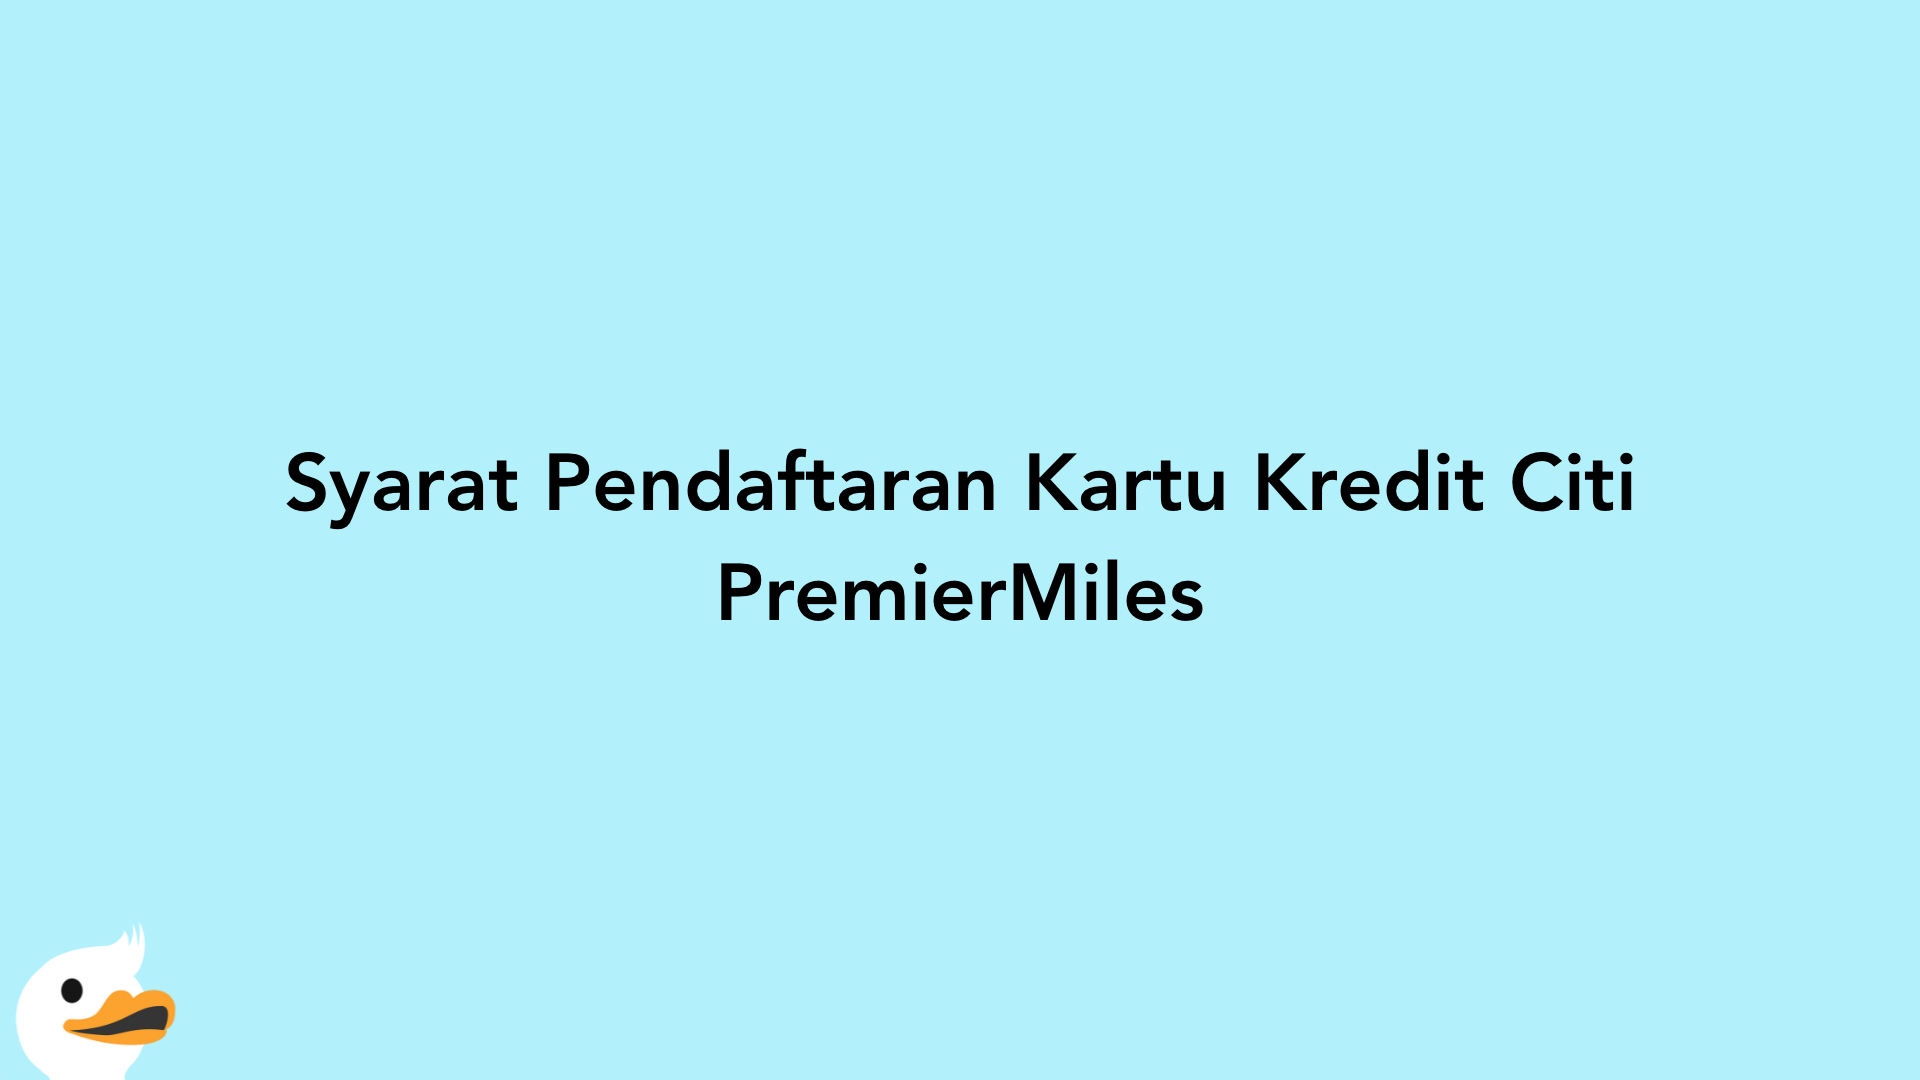 Syarat Pendaftaran Kartu Kredit Citi PremierMiles